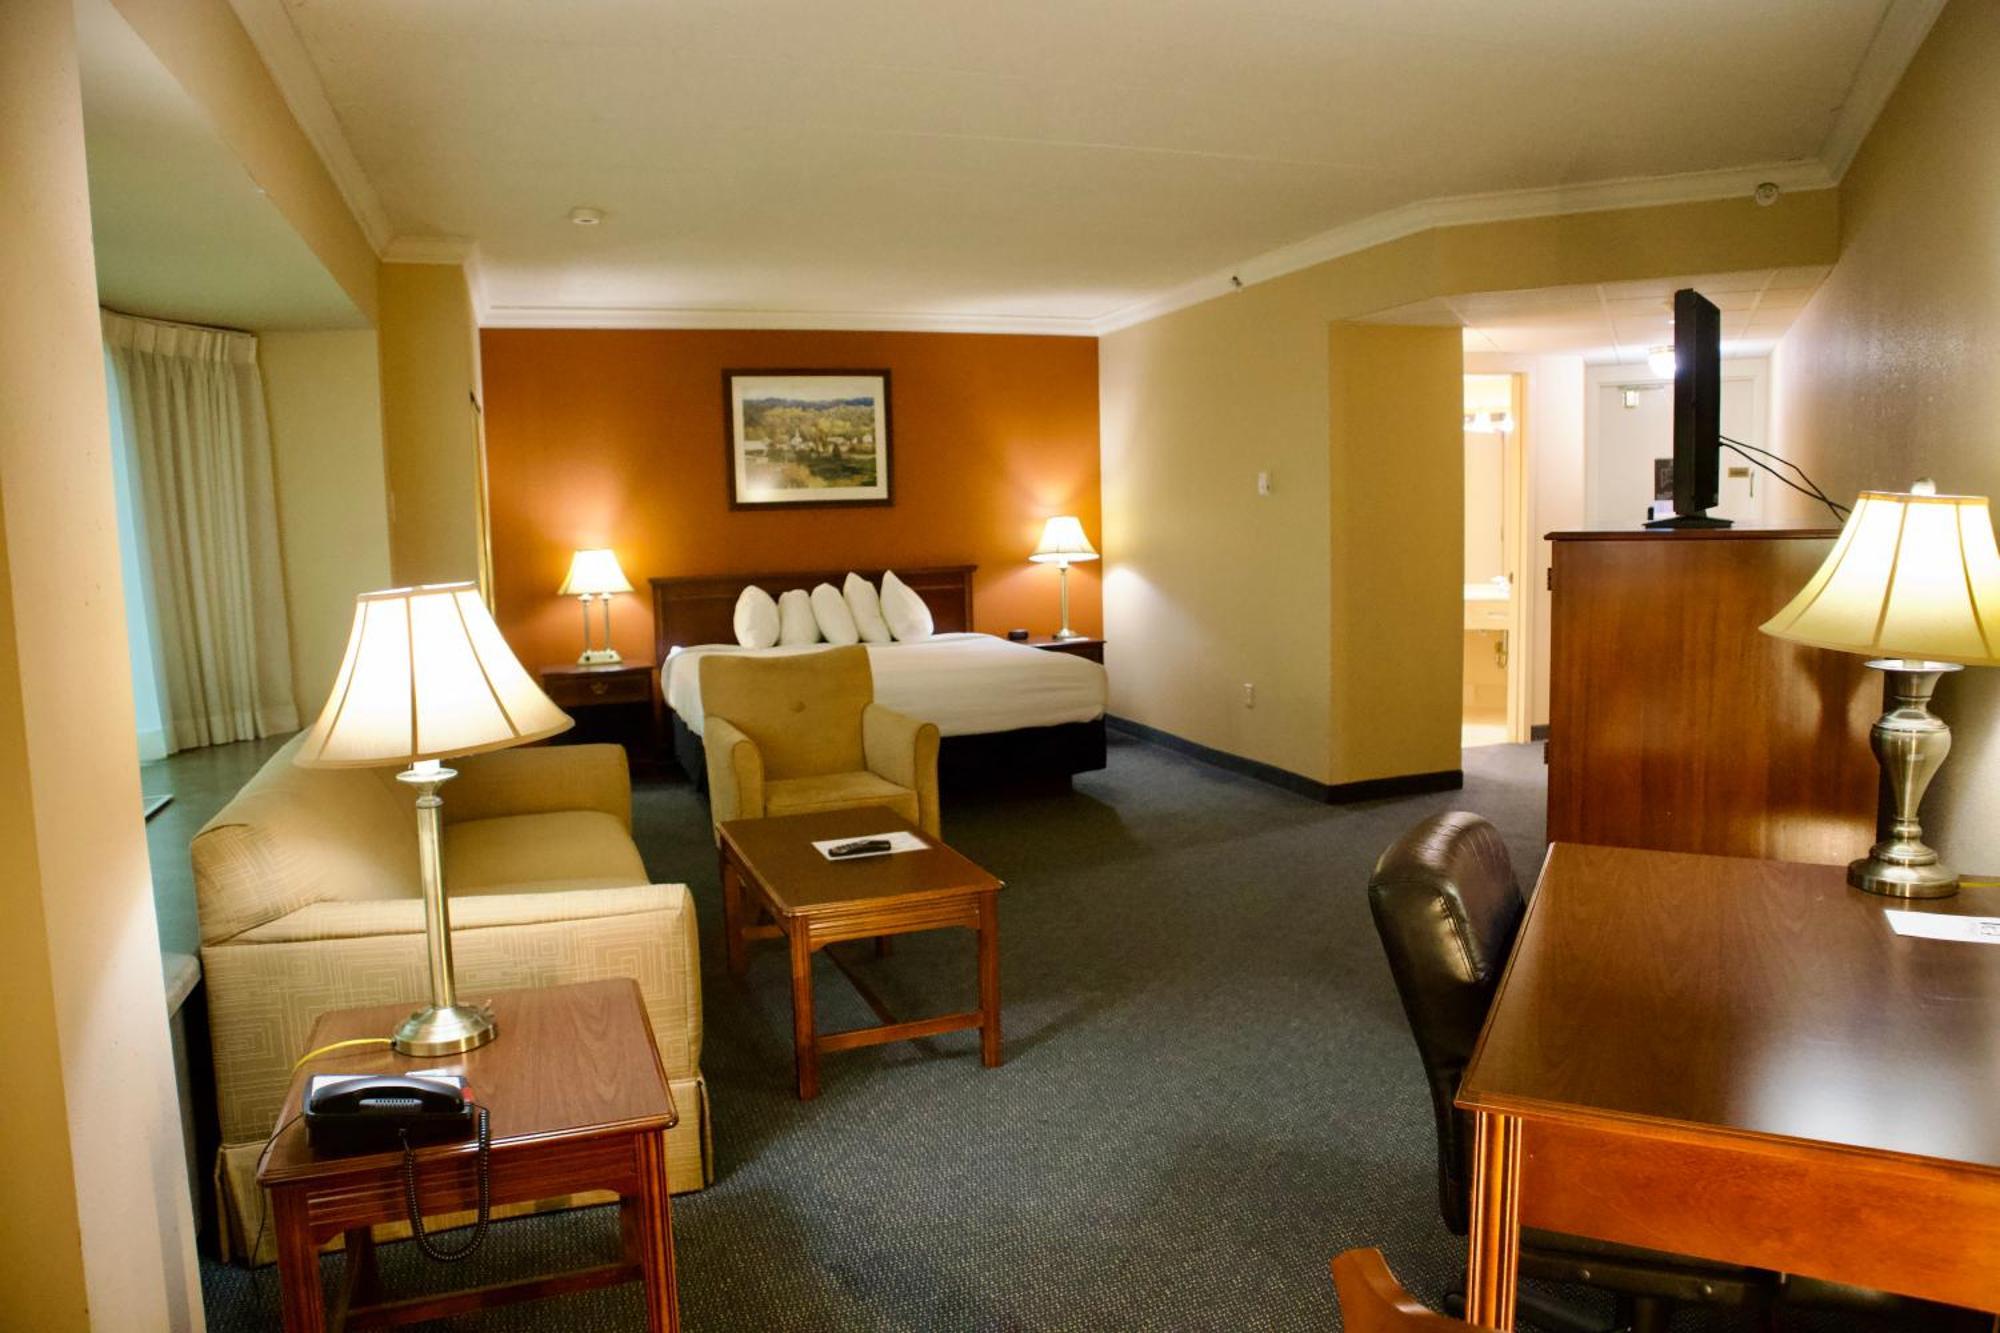 Hotel Mead Resorts & Conventions Center Wisconsin Rapids Kültér fotó